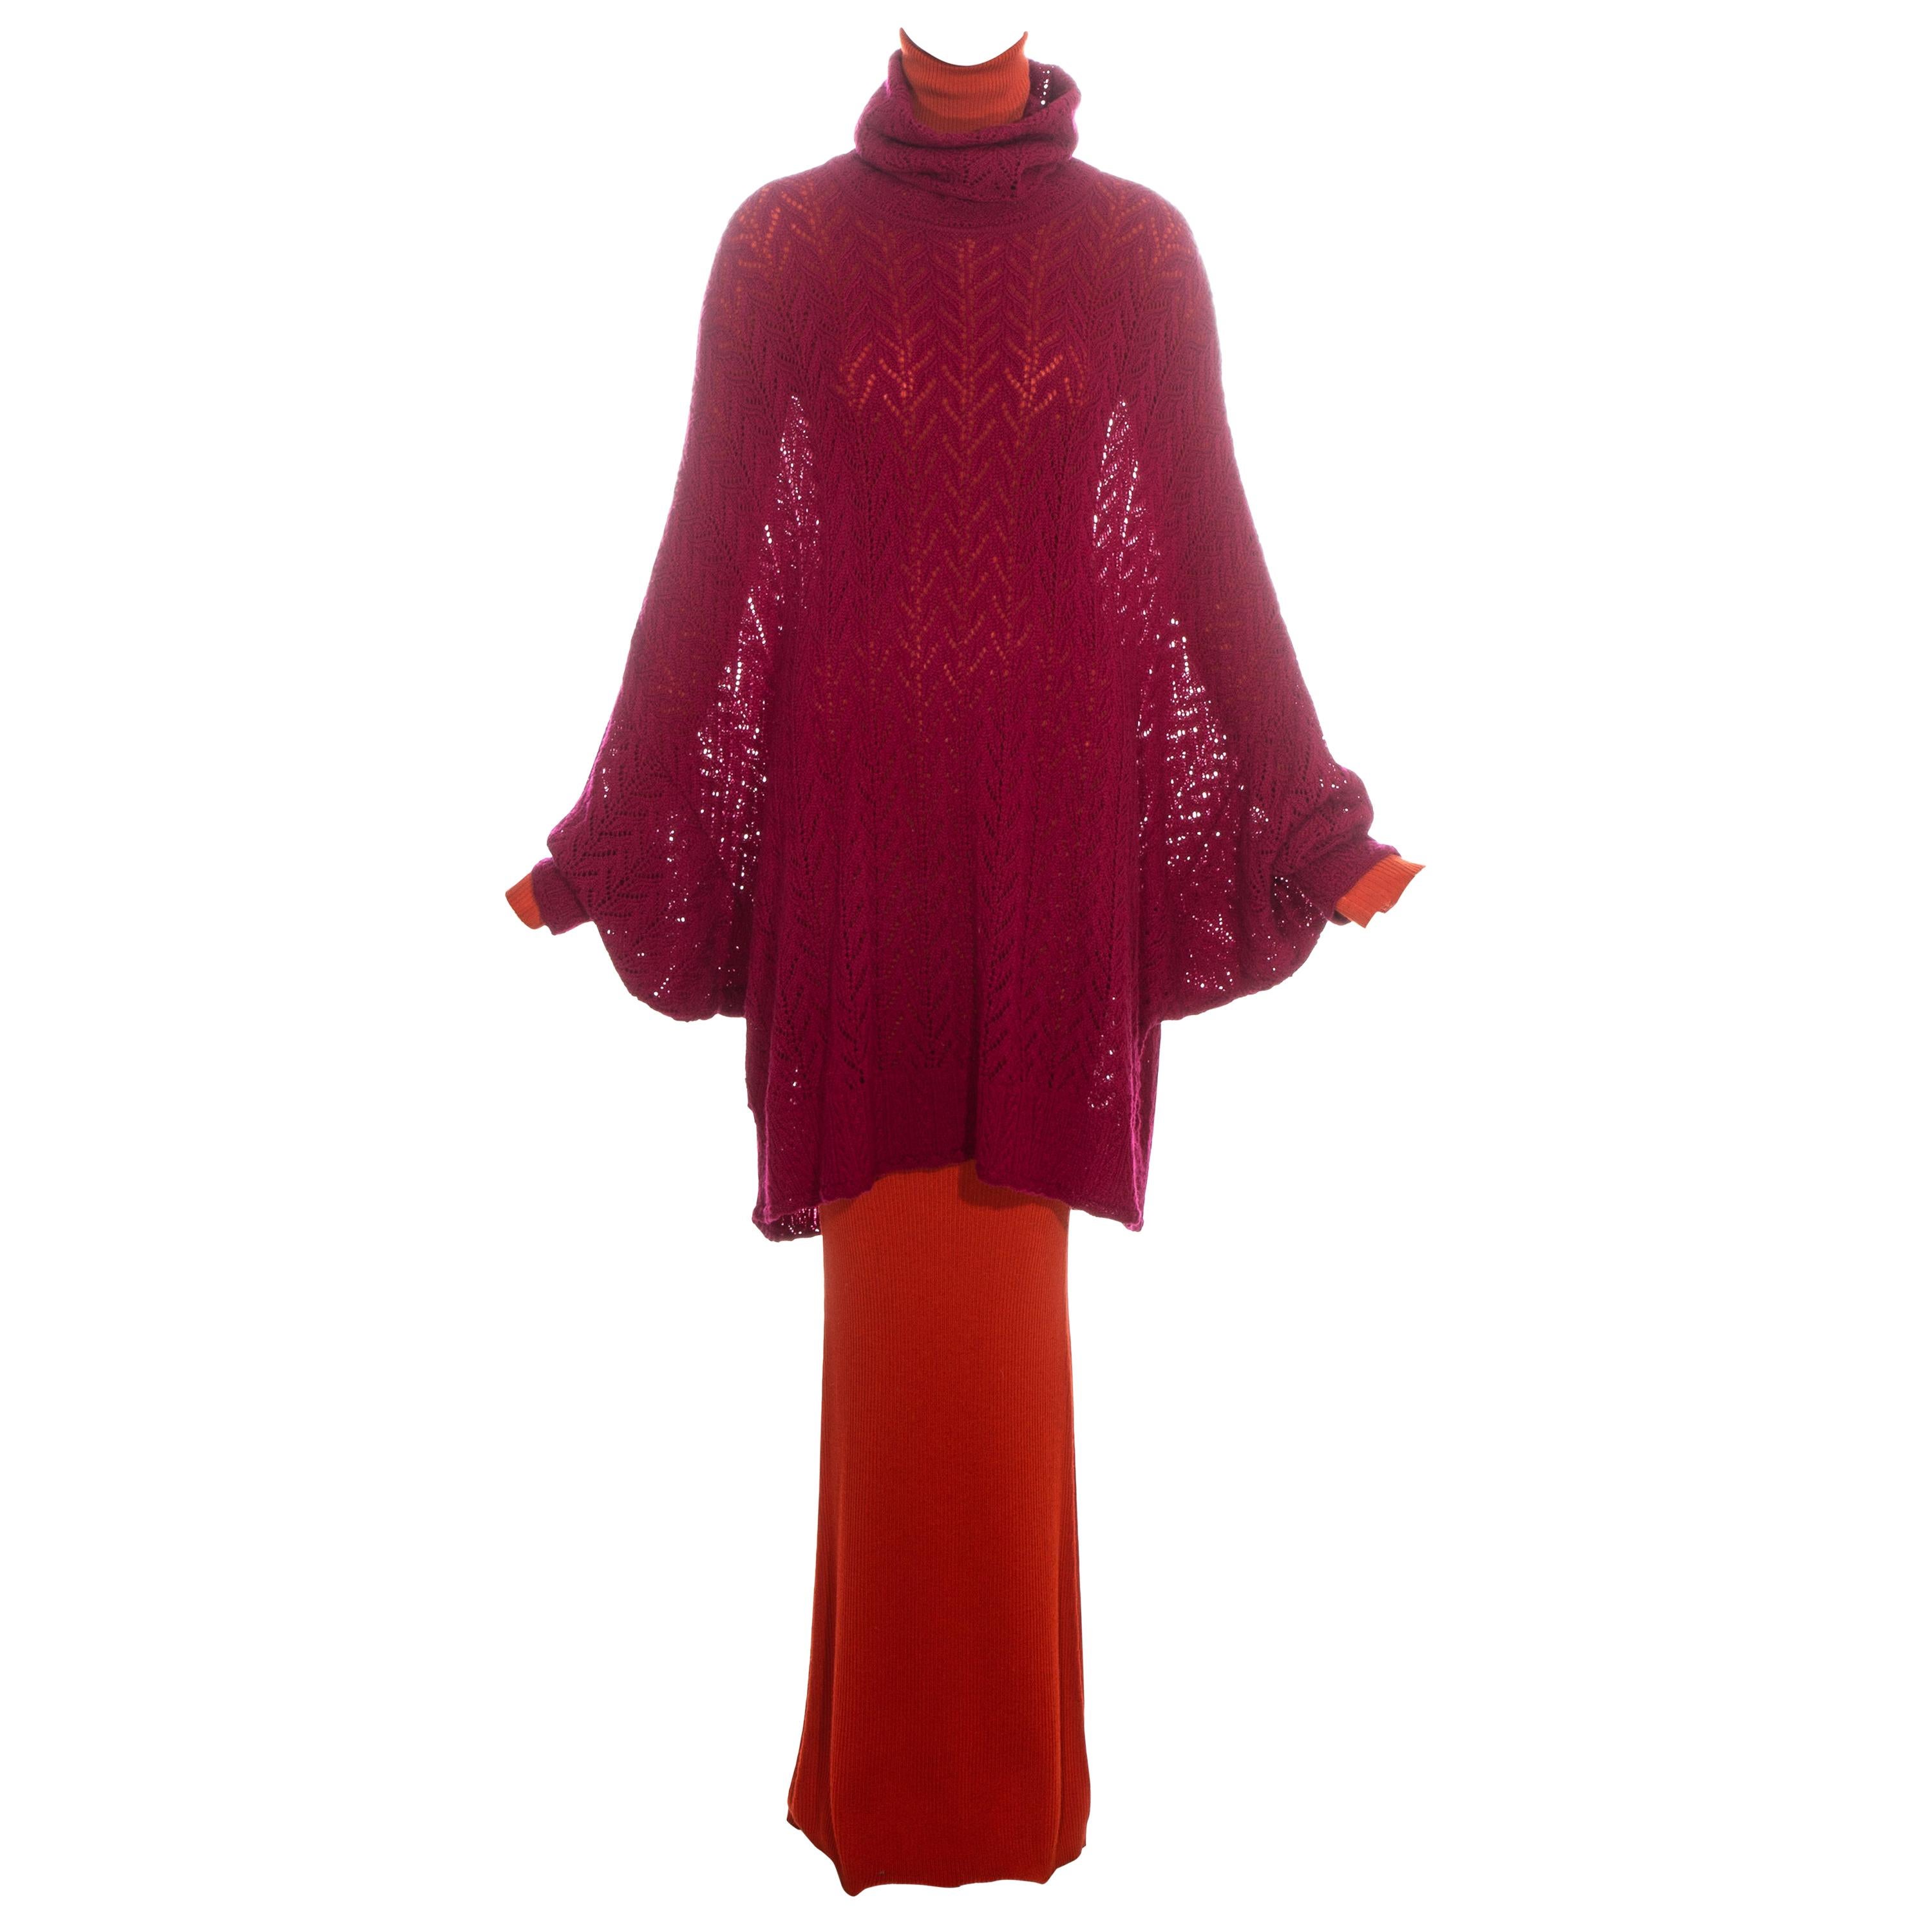 Christian Dior by John Galliano orange and maroon sweater dress set, fw 1998